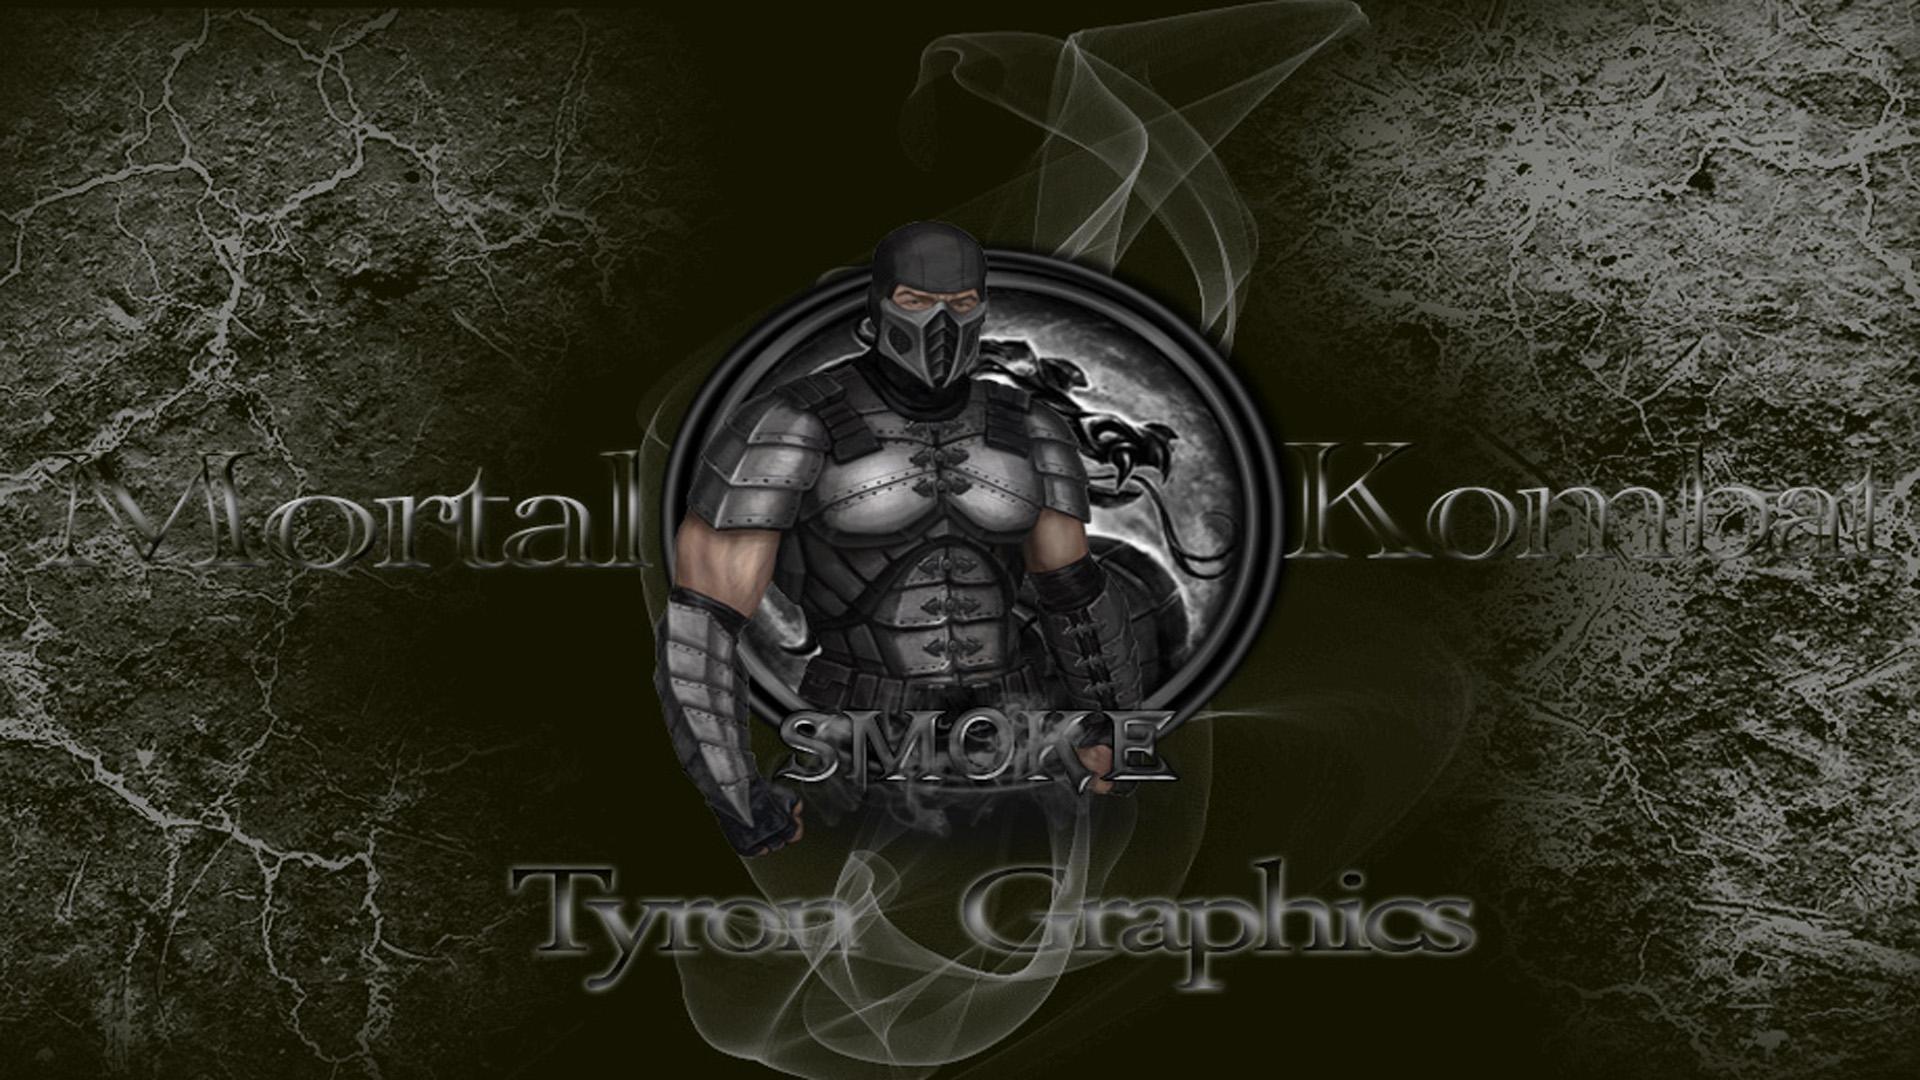 Smoke From Mortal Kombat HD desktop wallpaper, Widescreen, High Definition